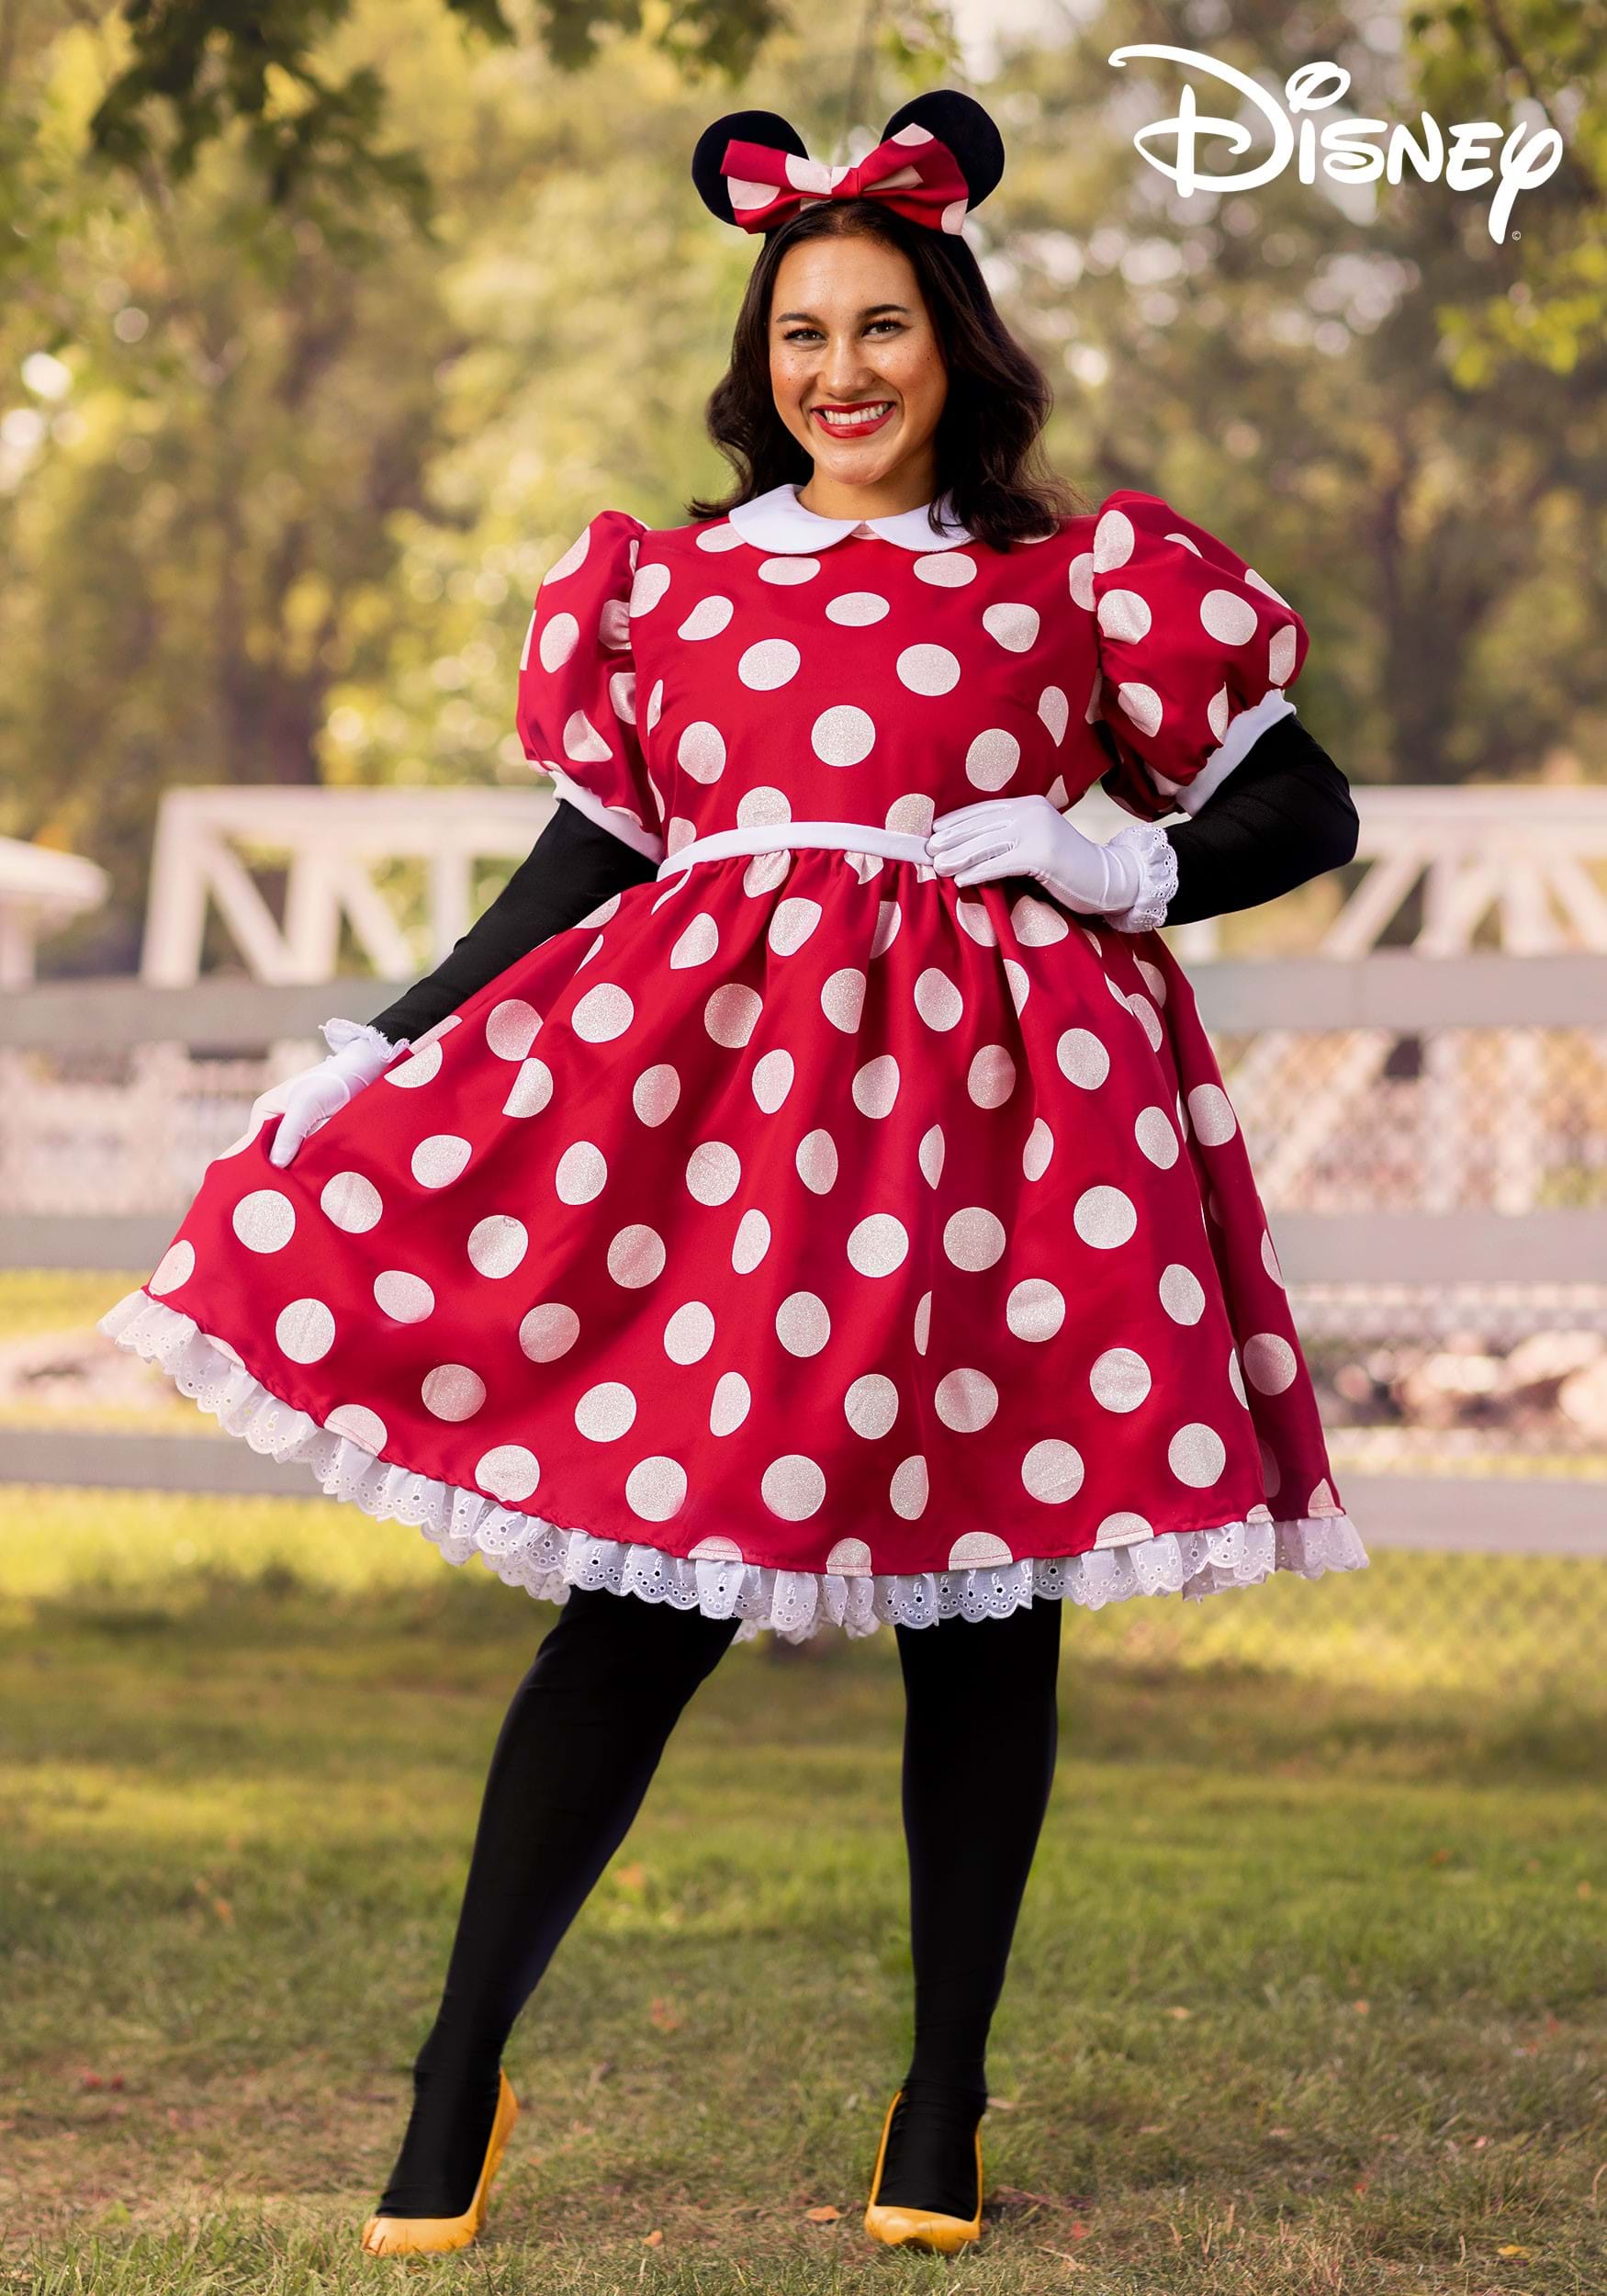 Disney Women's Plus Size Deluxe Minnie Mouse Costume